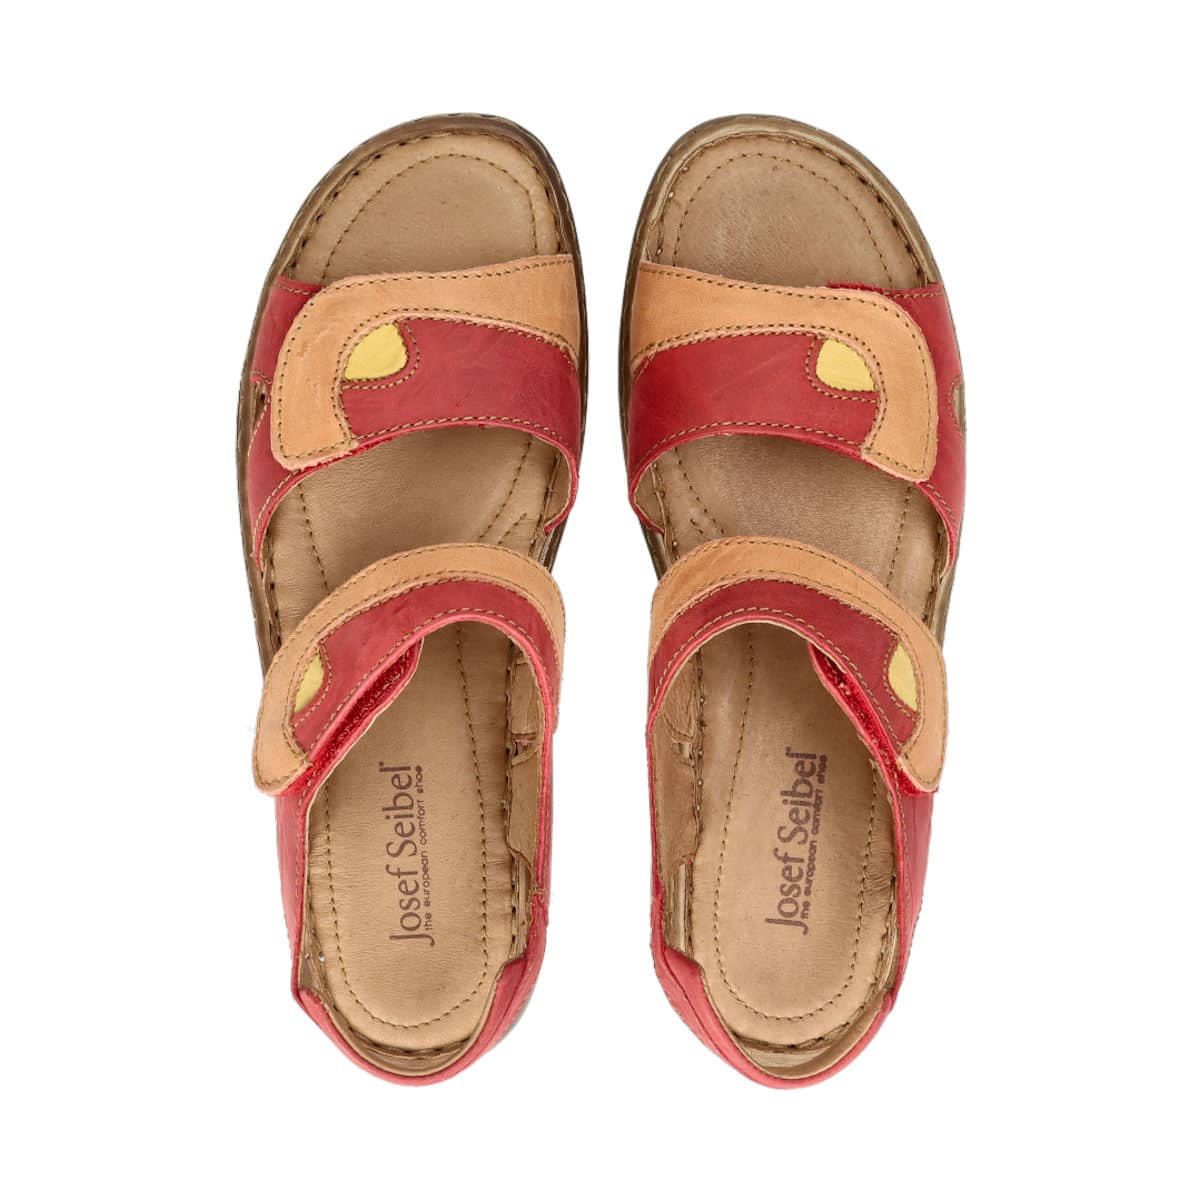 Josef Seibel women's leather sandals multi/coloured